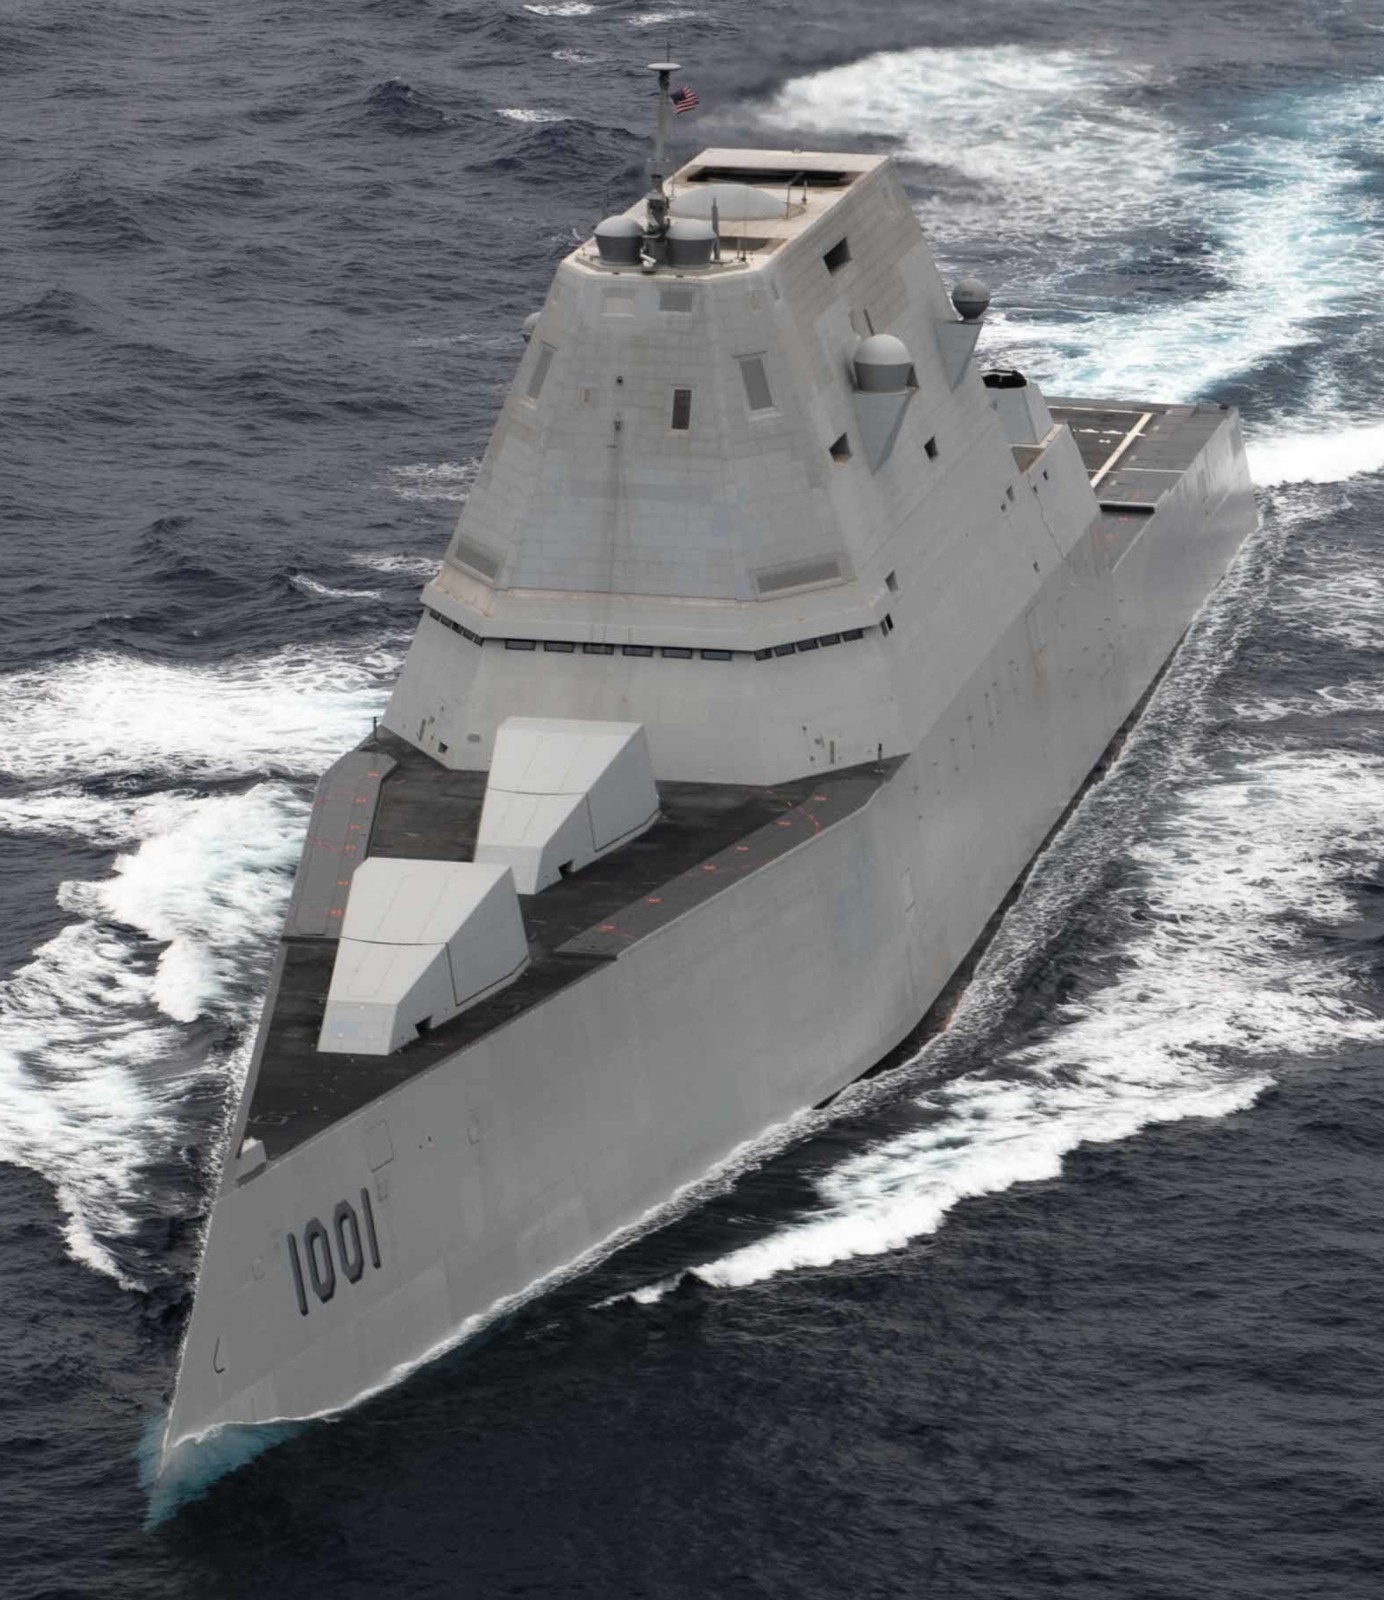 ddg-1001 uss michael monsoor zumwalt class guided missile destroyer us navy 34